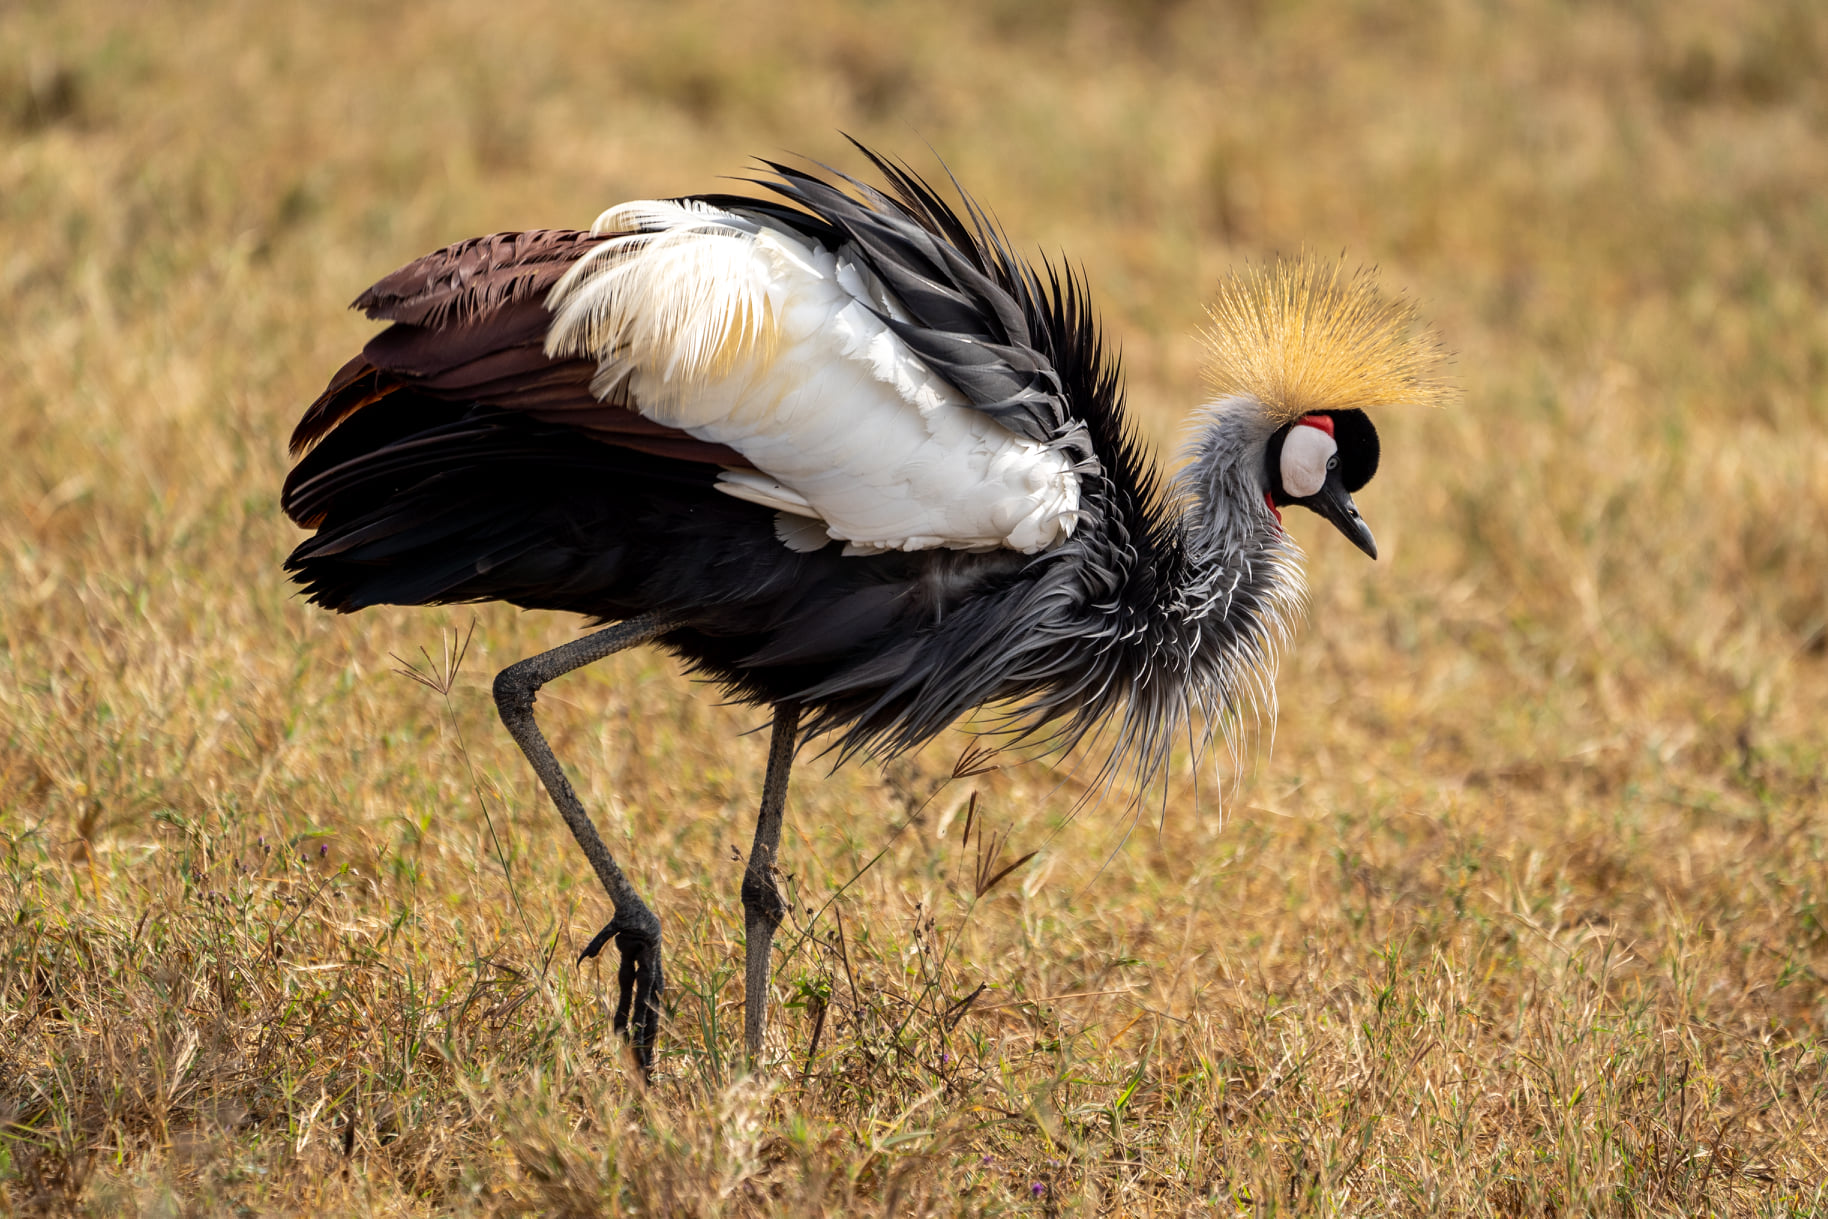 Important bird areas in Uganda